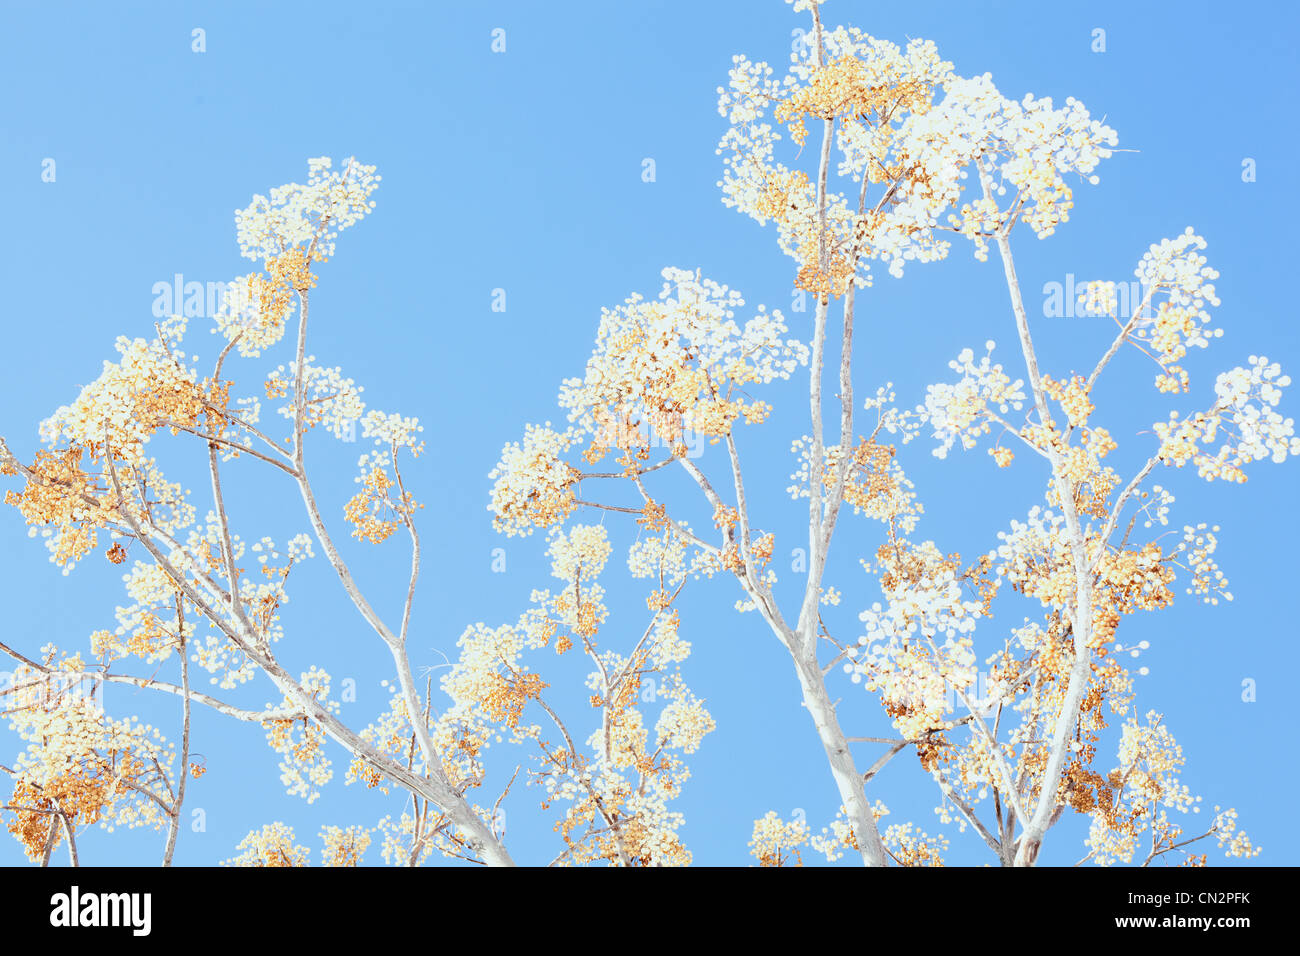 Plant against clear blue sky Stock Photo